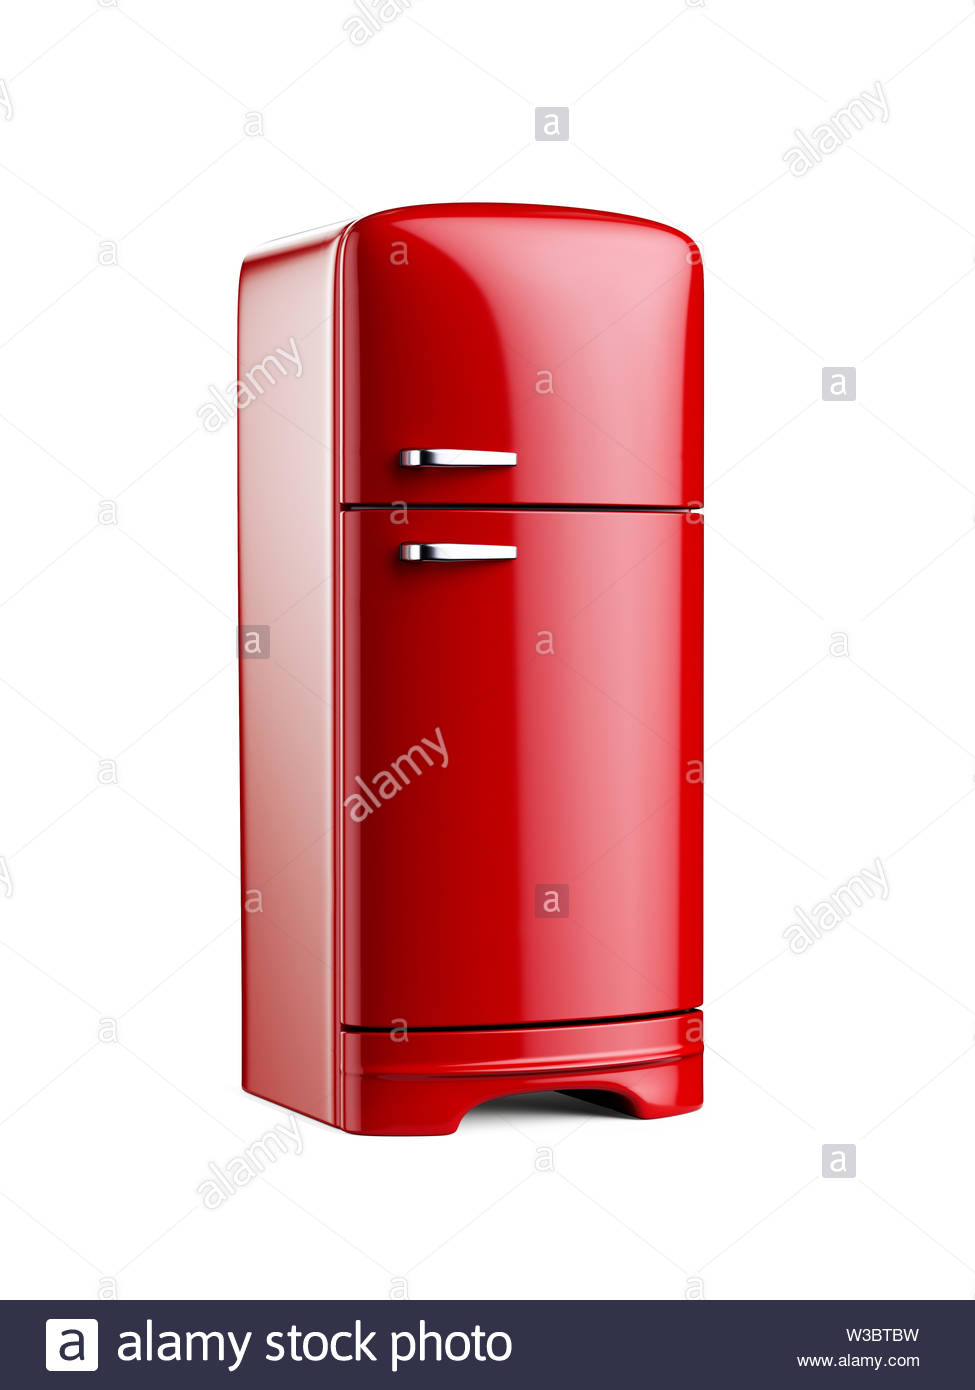 Retro Red Fridge Refrigerator Isolated On White Background 3d